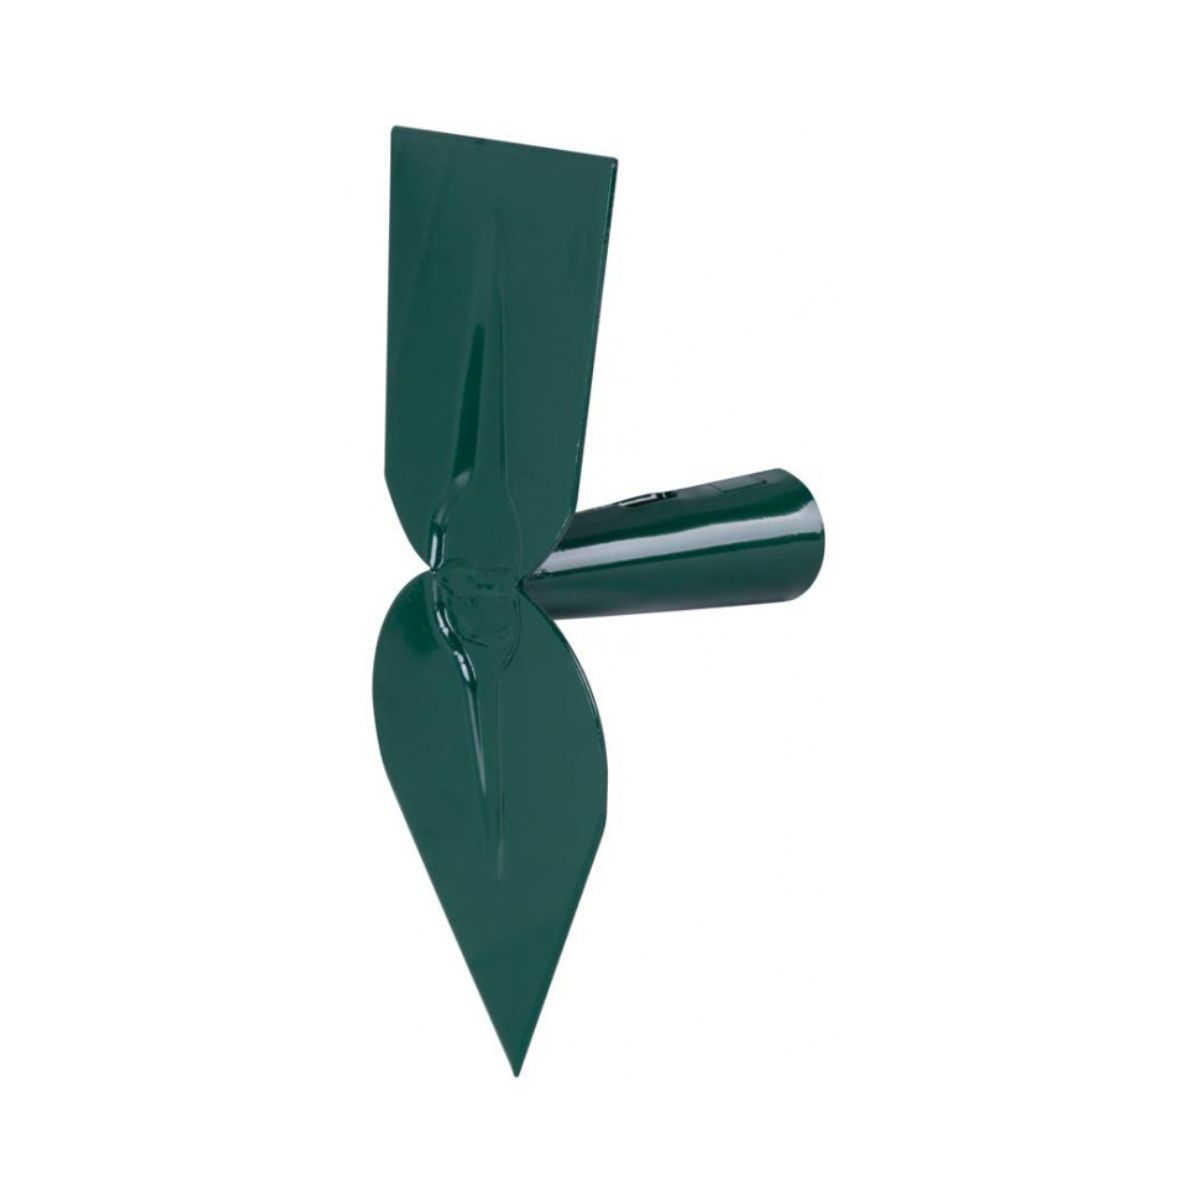 Unelte de gradinarit - Sapaliga metalica de gradina, verde  FED 001 (fara maner), hectarul.ro